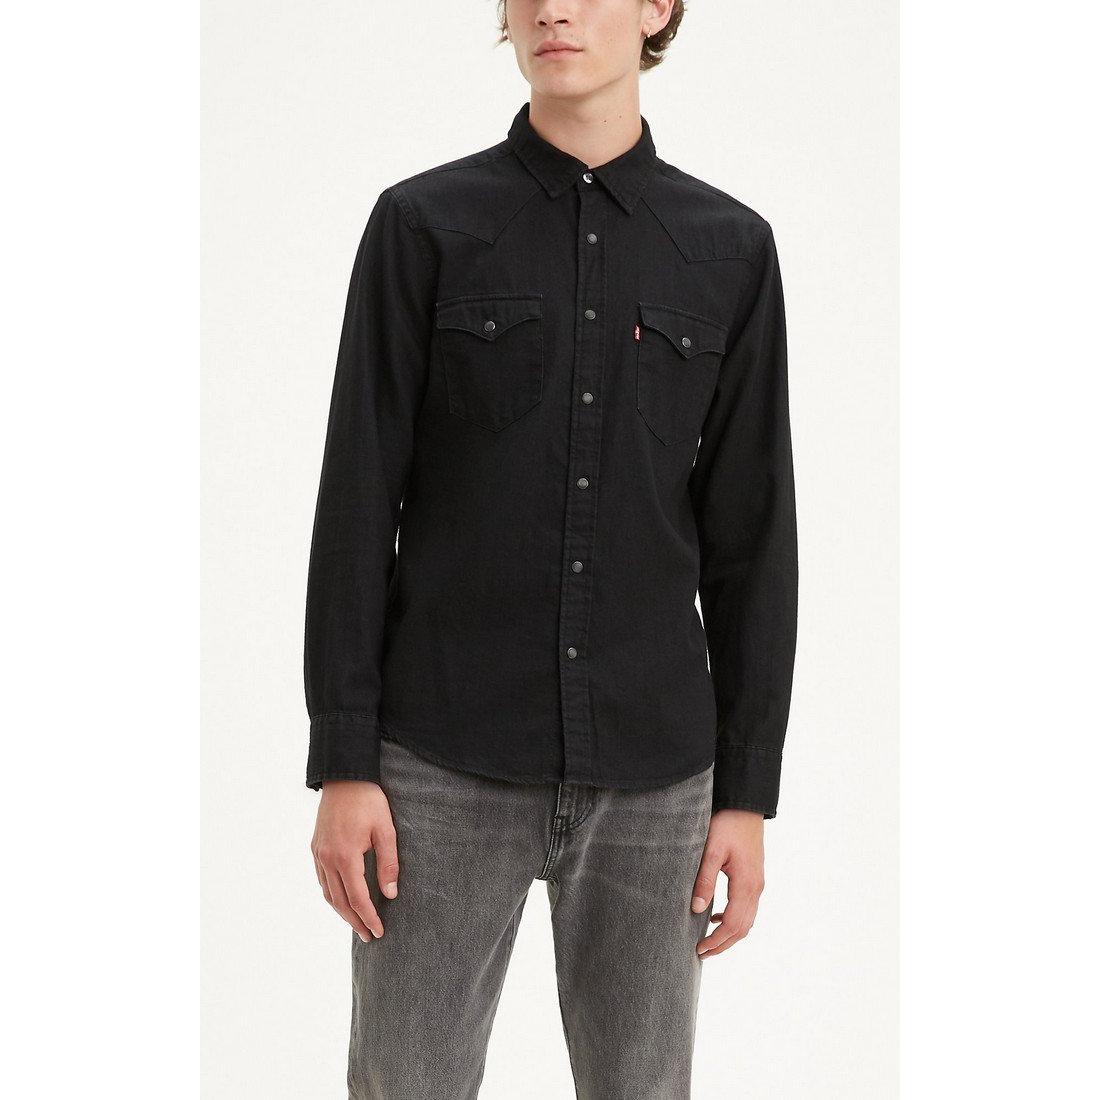 Levi's - Classic Western Standard Shirt in New Black Rinse-SQ1060221